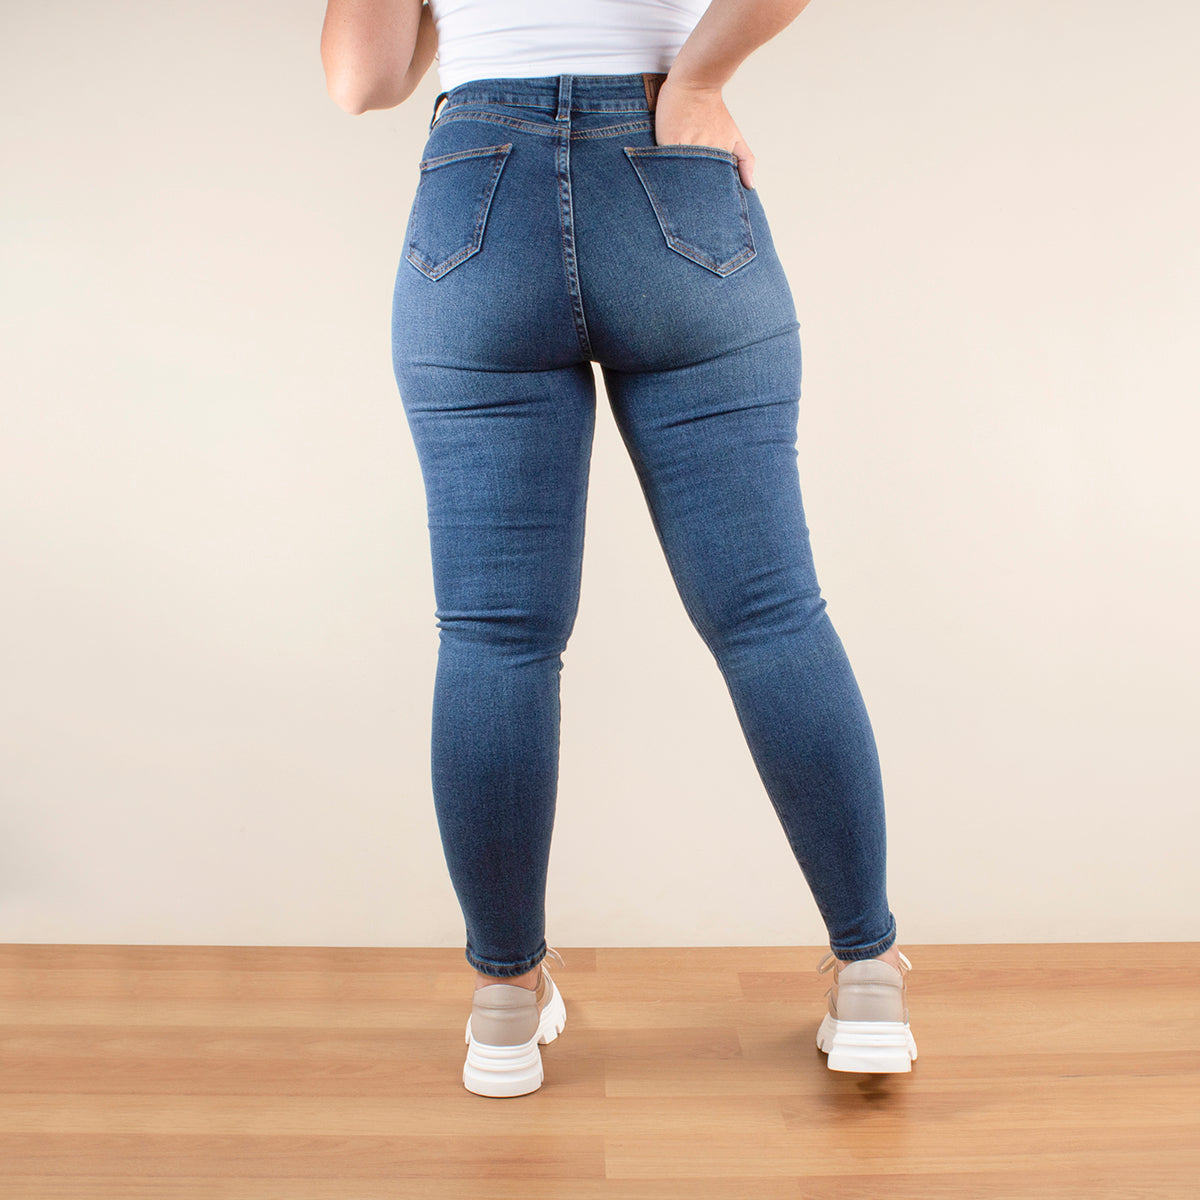 Jeans tipo skinny color azul con desgastes